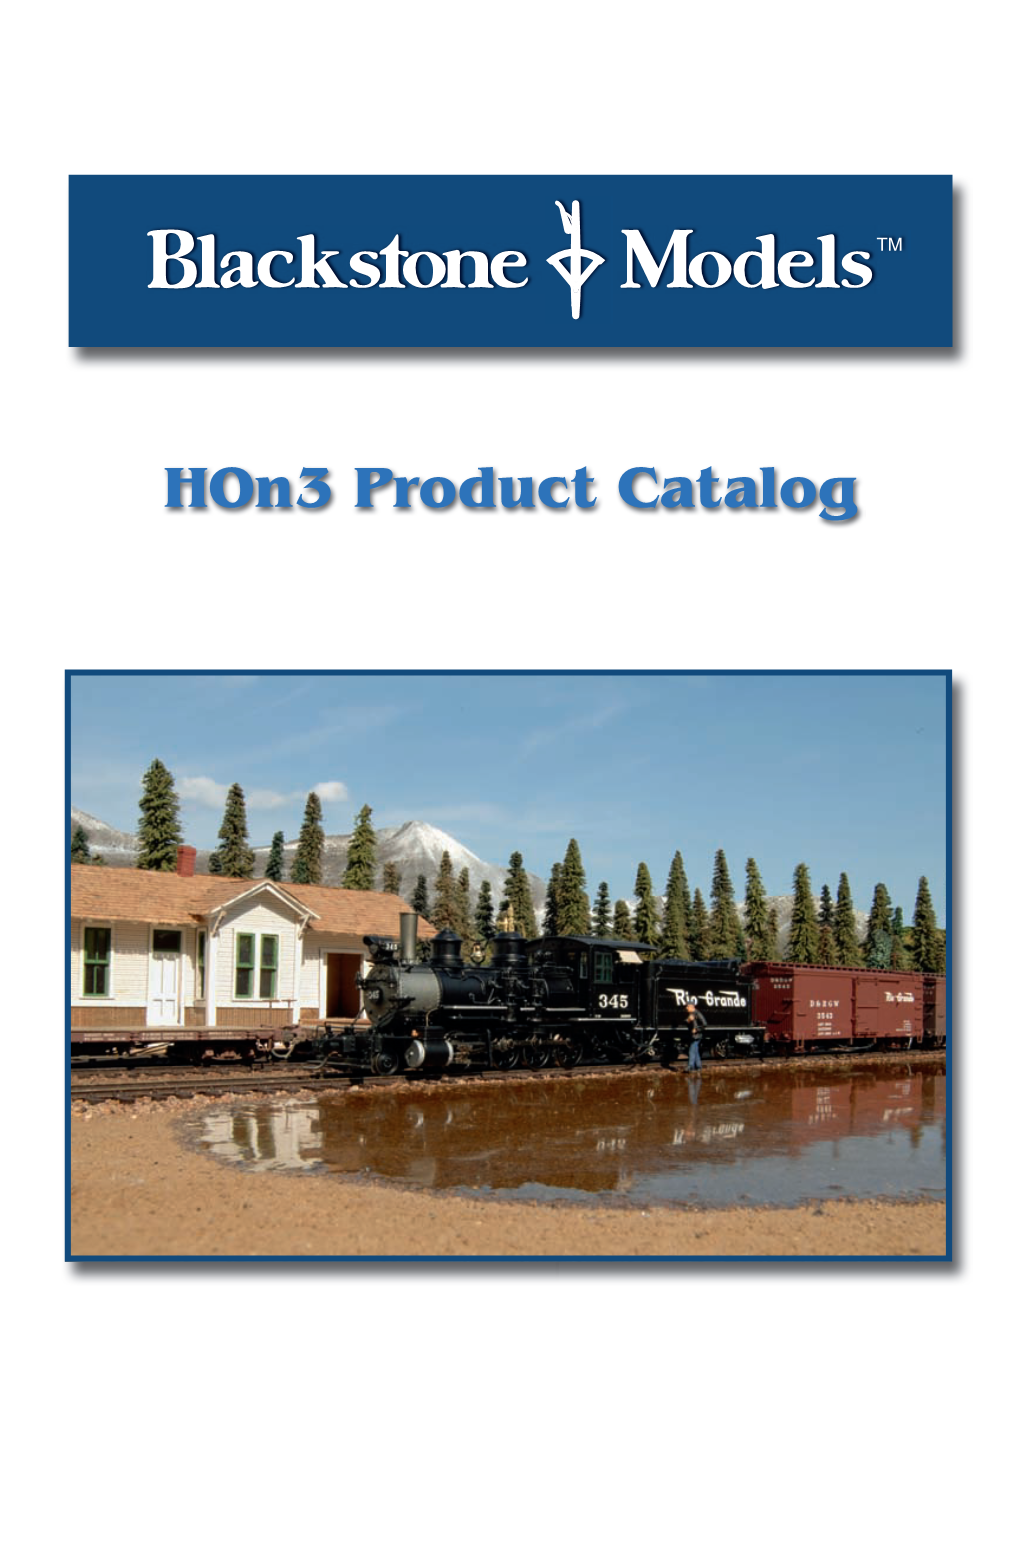 Blackstone Models Product Catalog